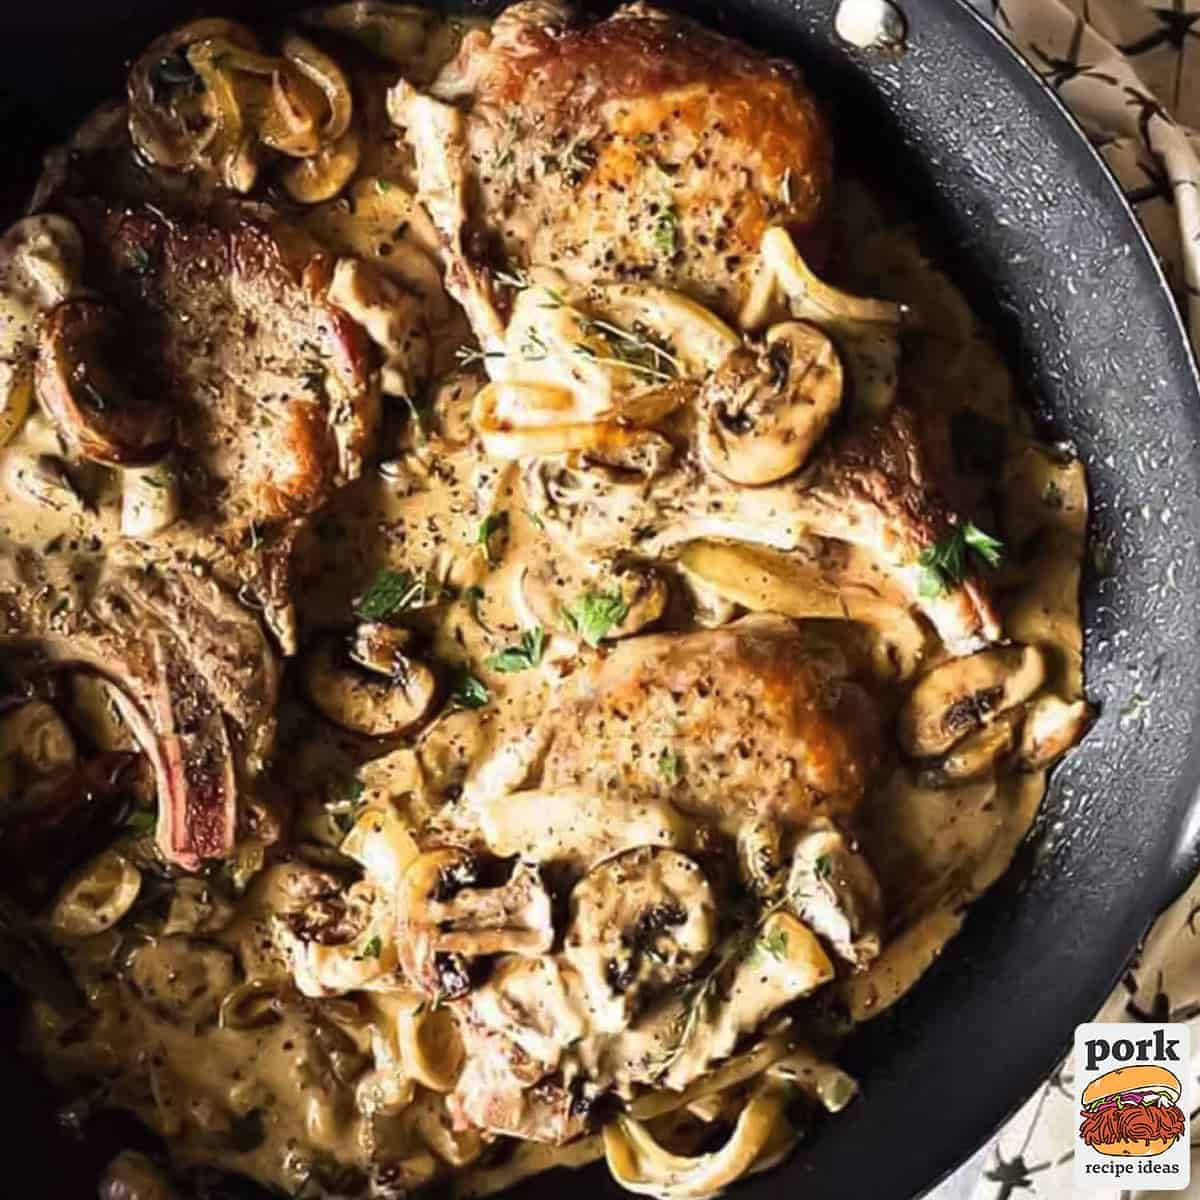 pork chops in mushroom gravy in a pan